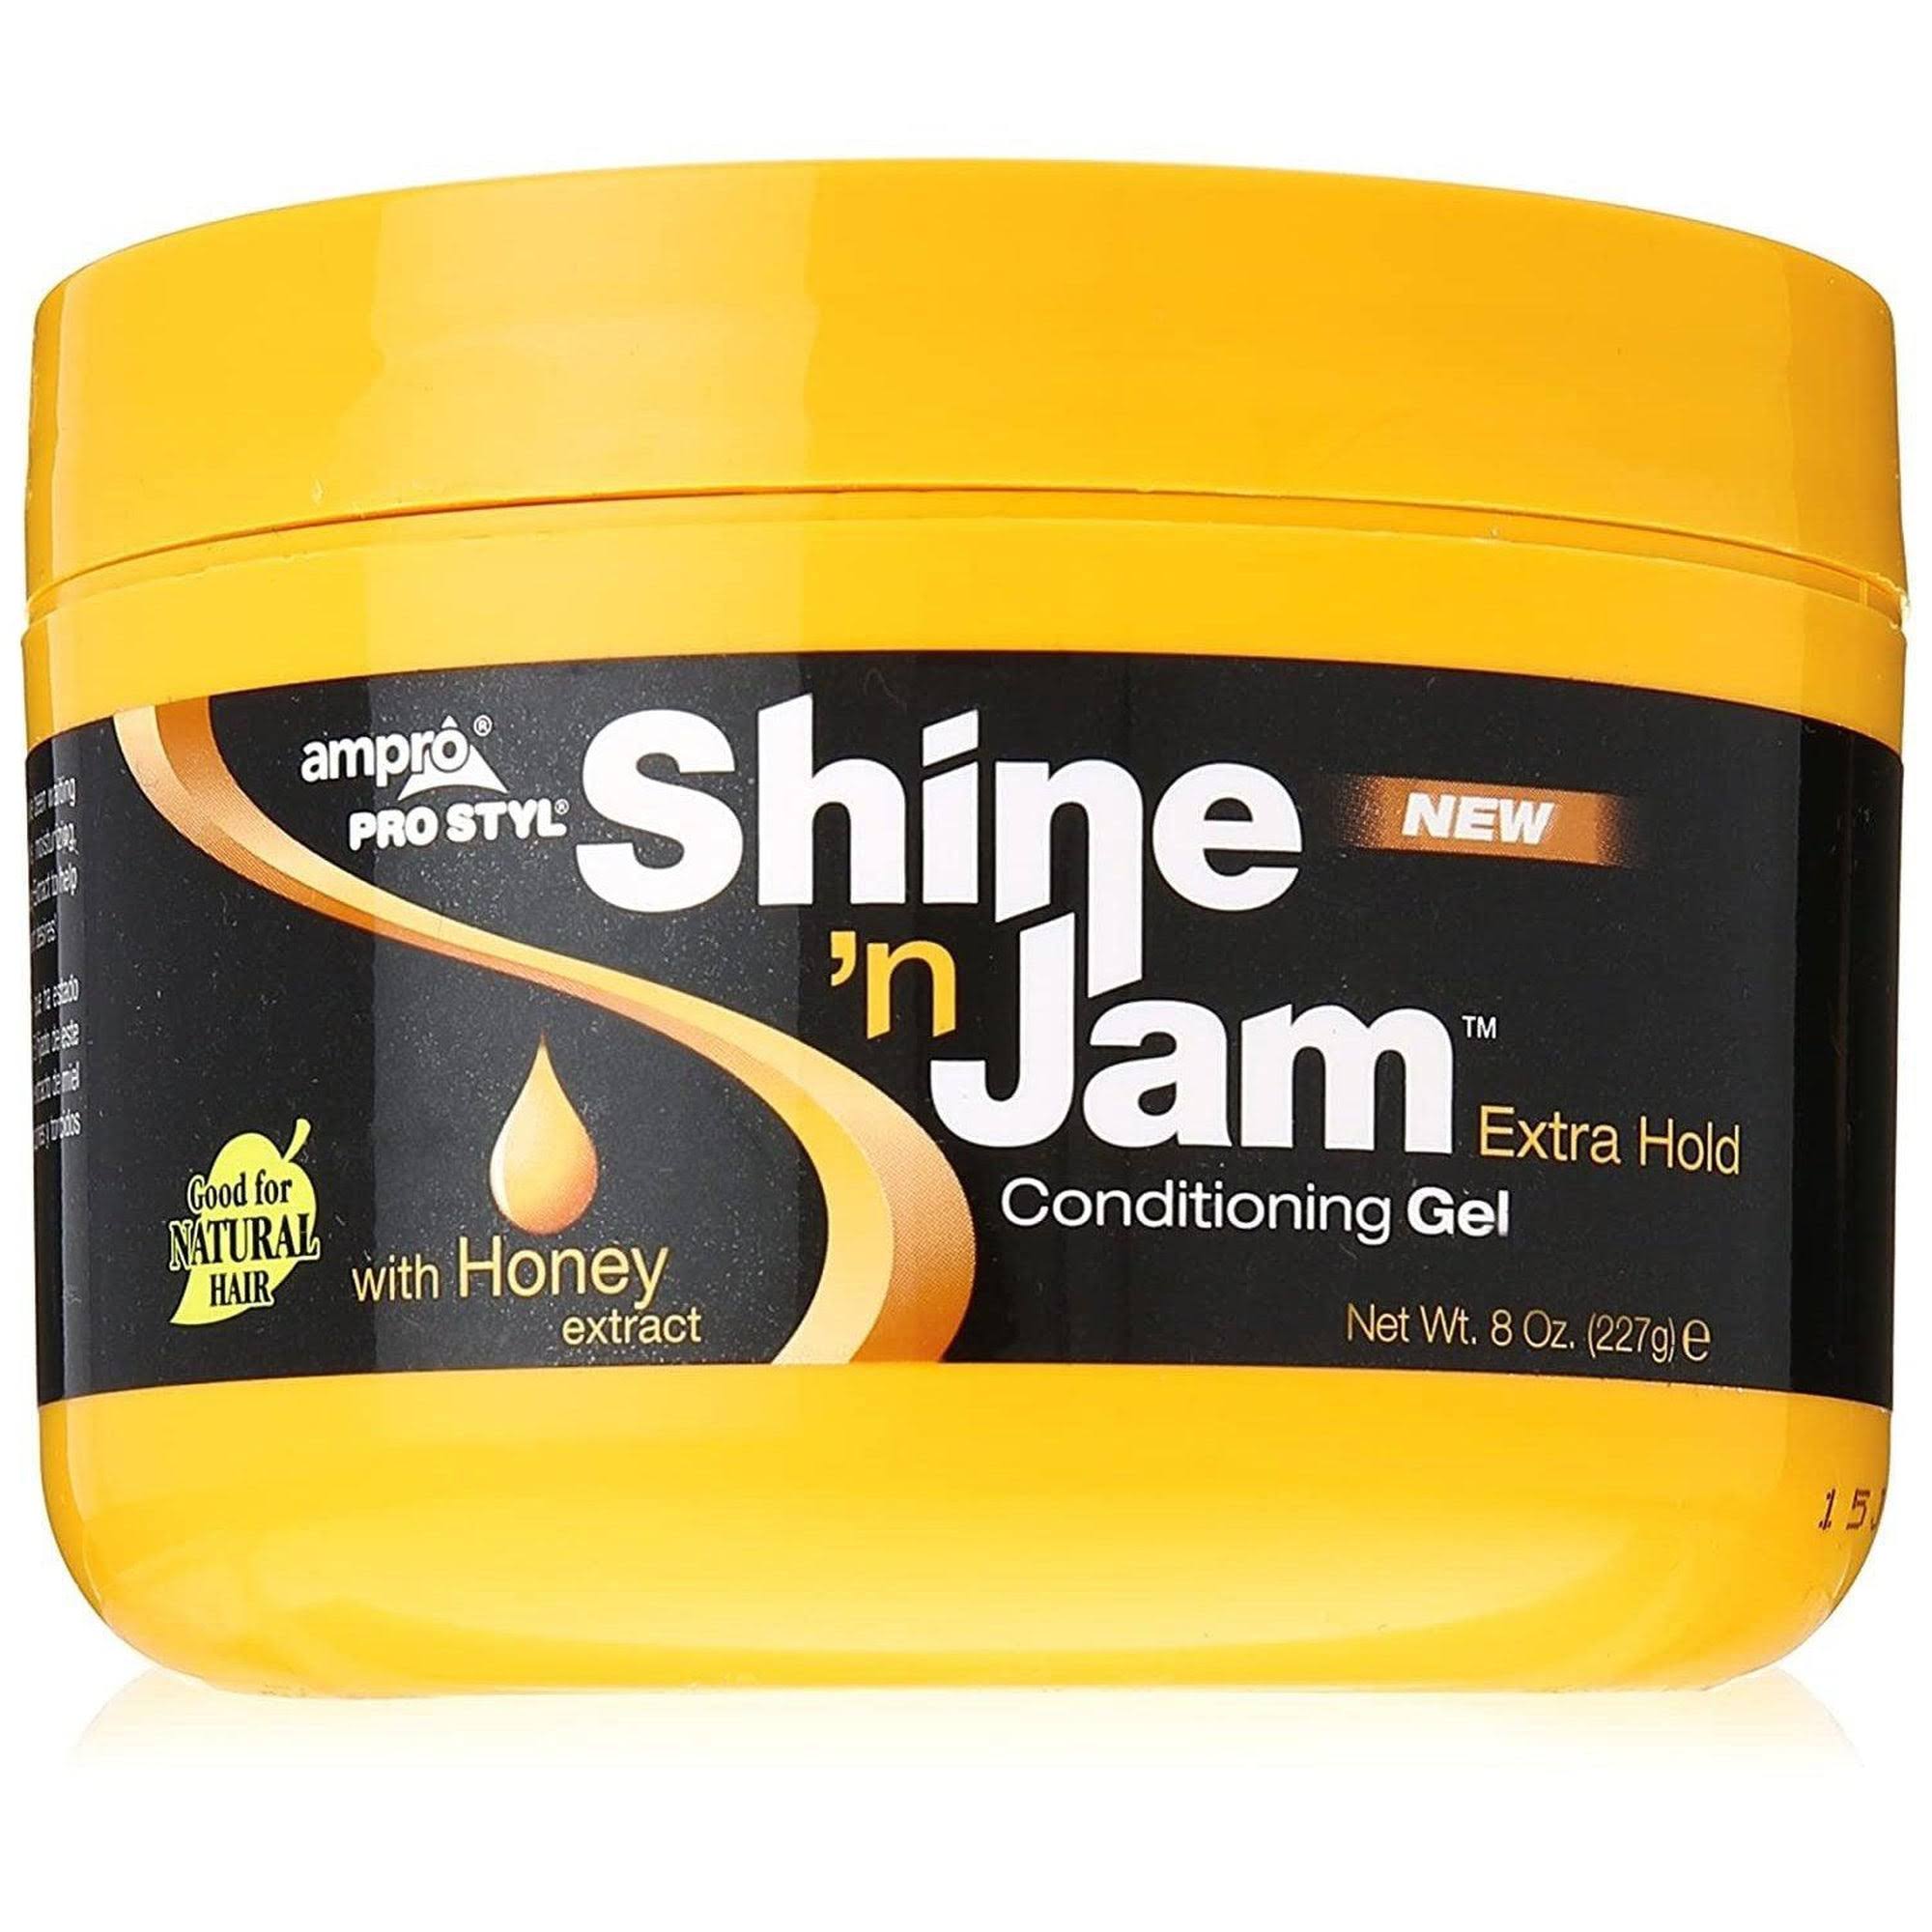 Shine 'n Jam Extra Hold Conditioning Gel - 8oz